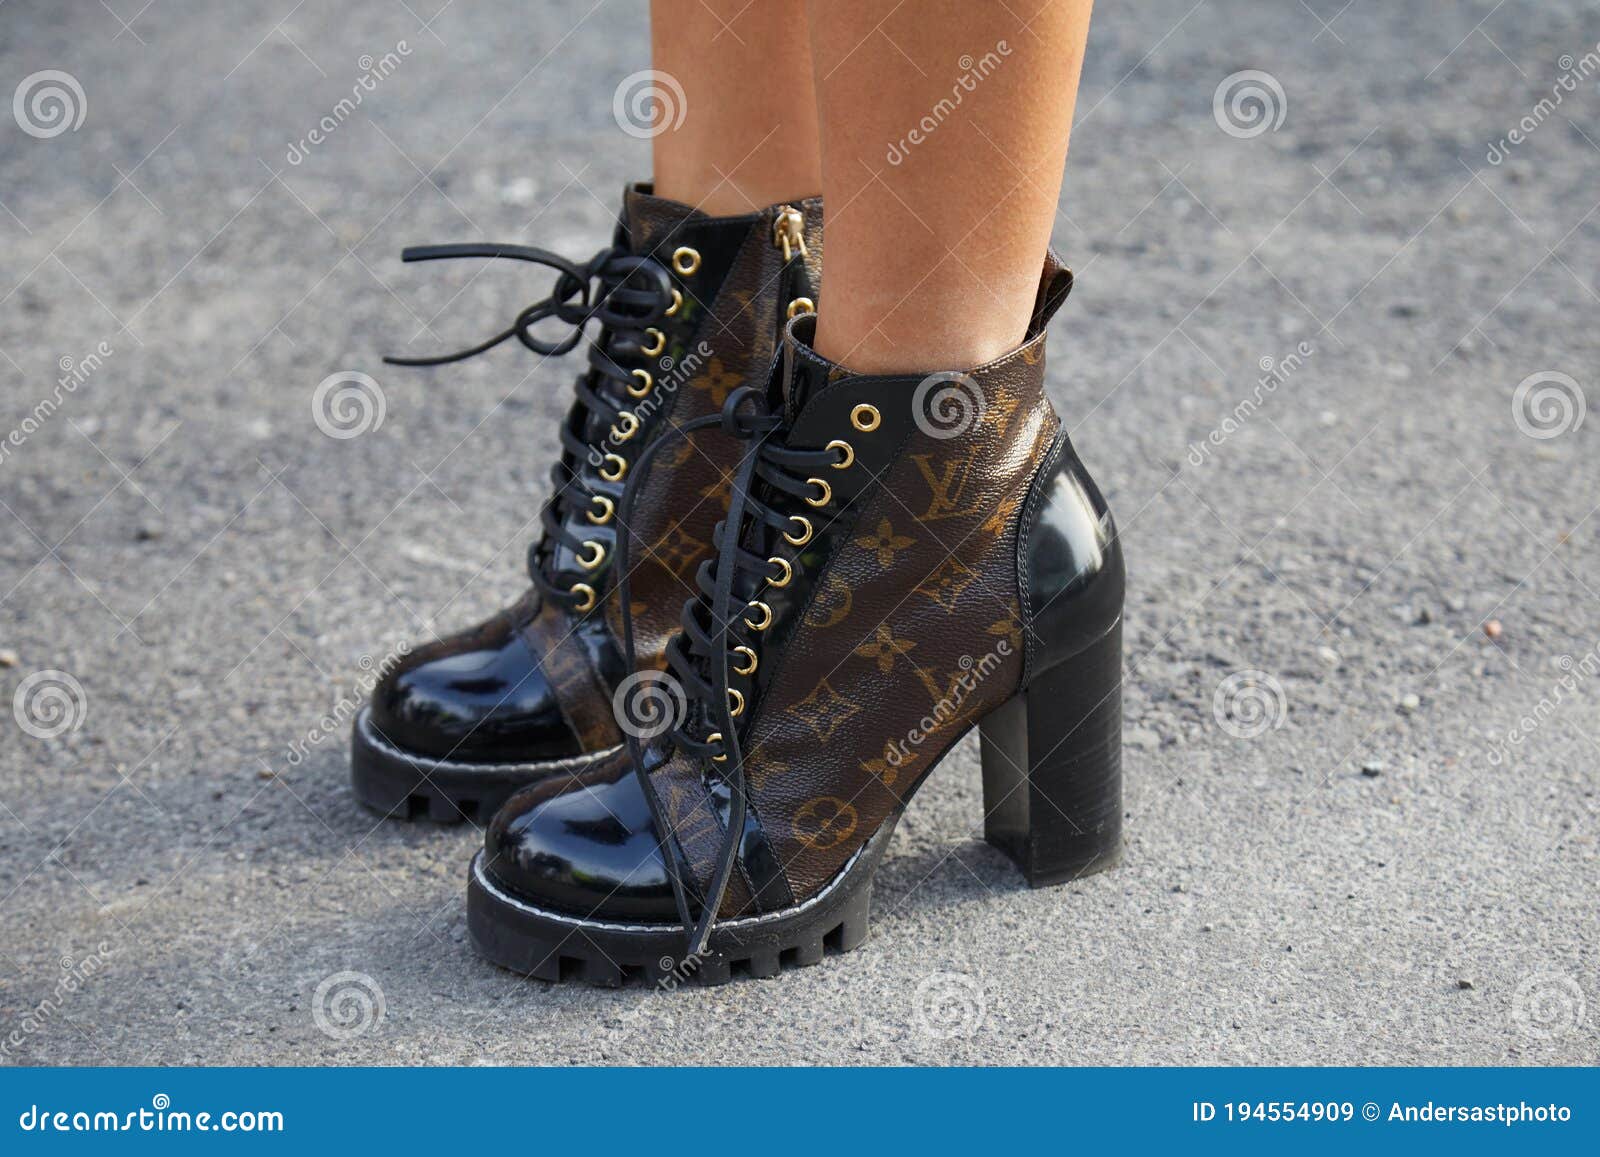 woman louis vuitton long boots